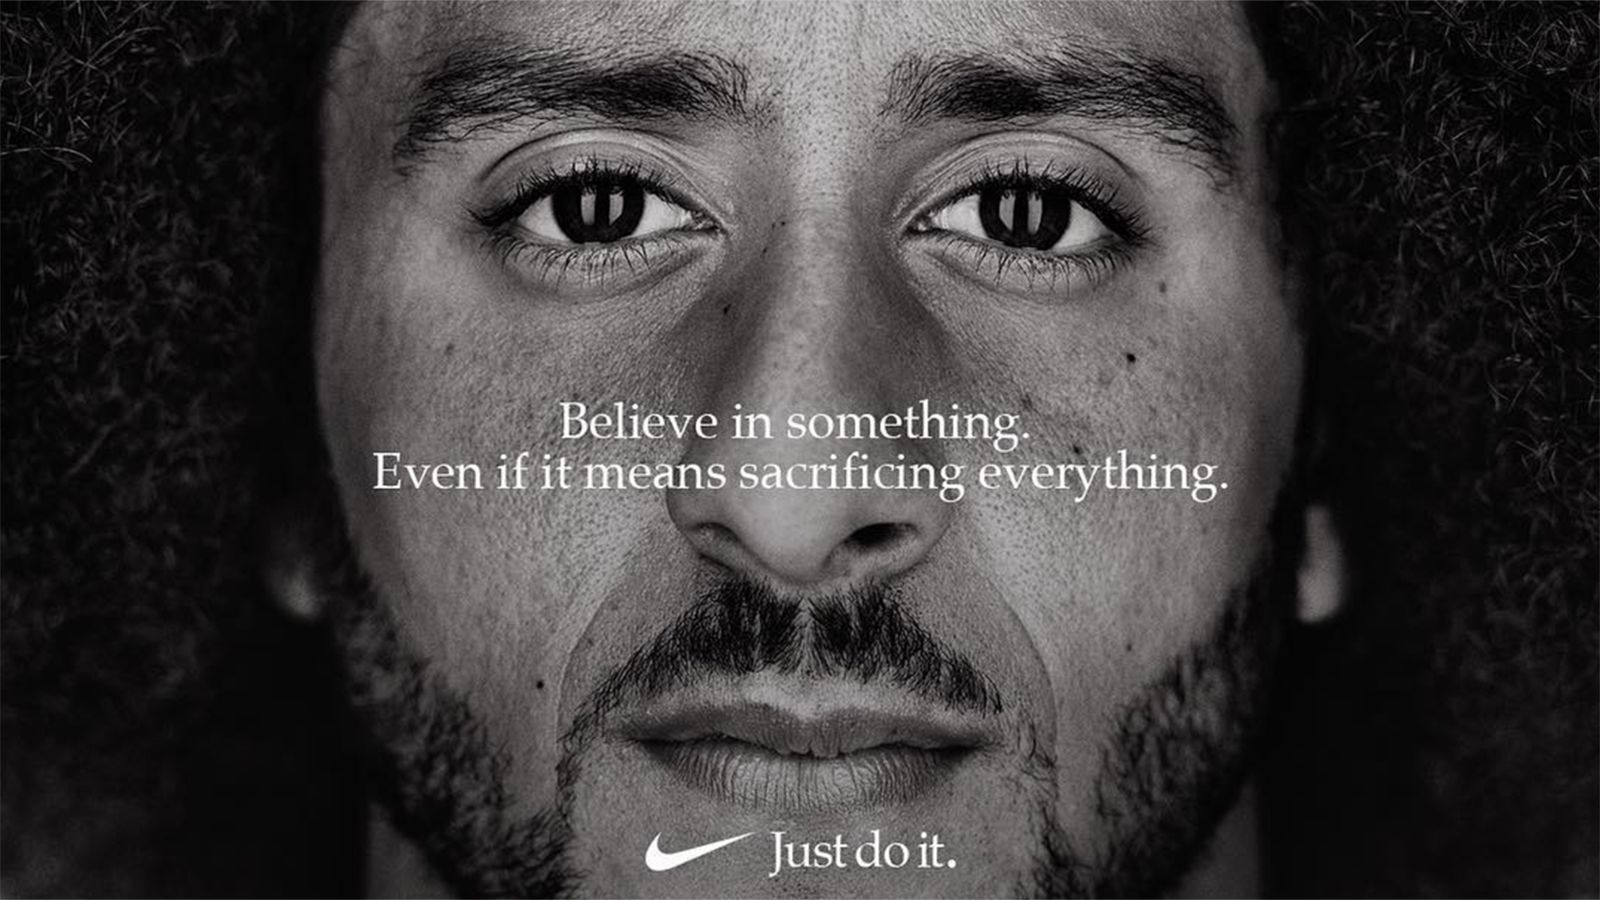 vloek versus Misverstand How Nike's "Just do it" became a slogan about activism too | CNN Politics